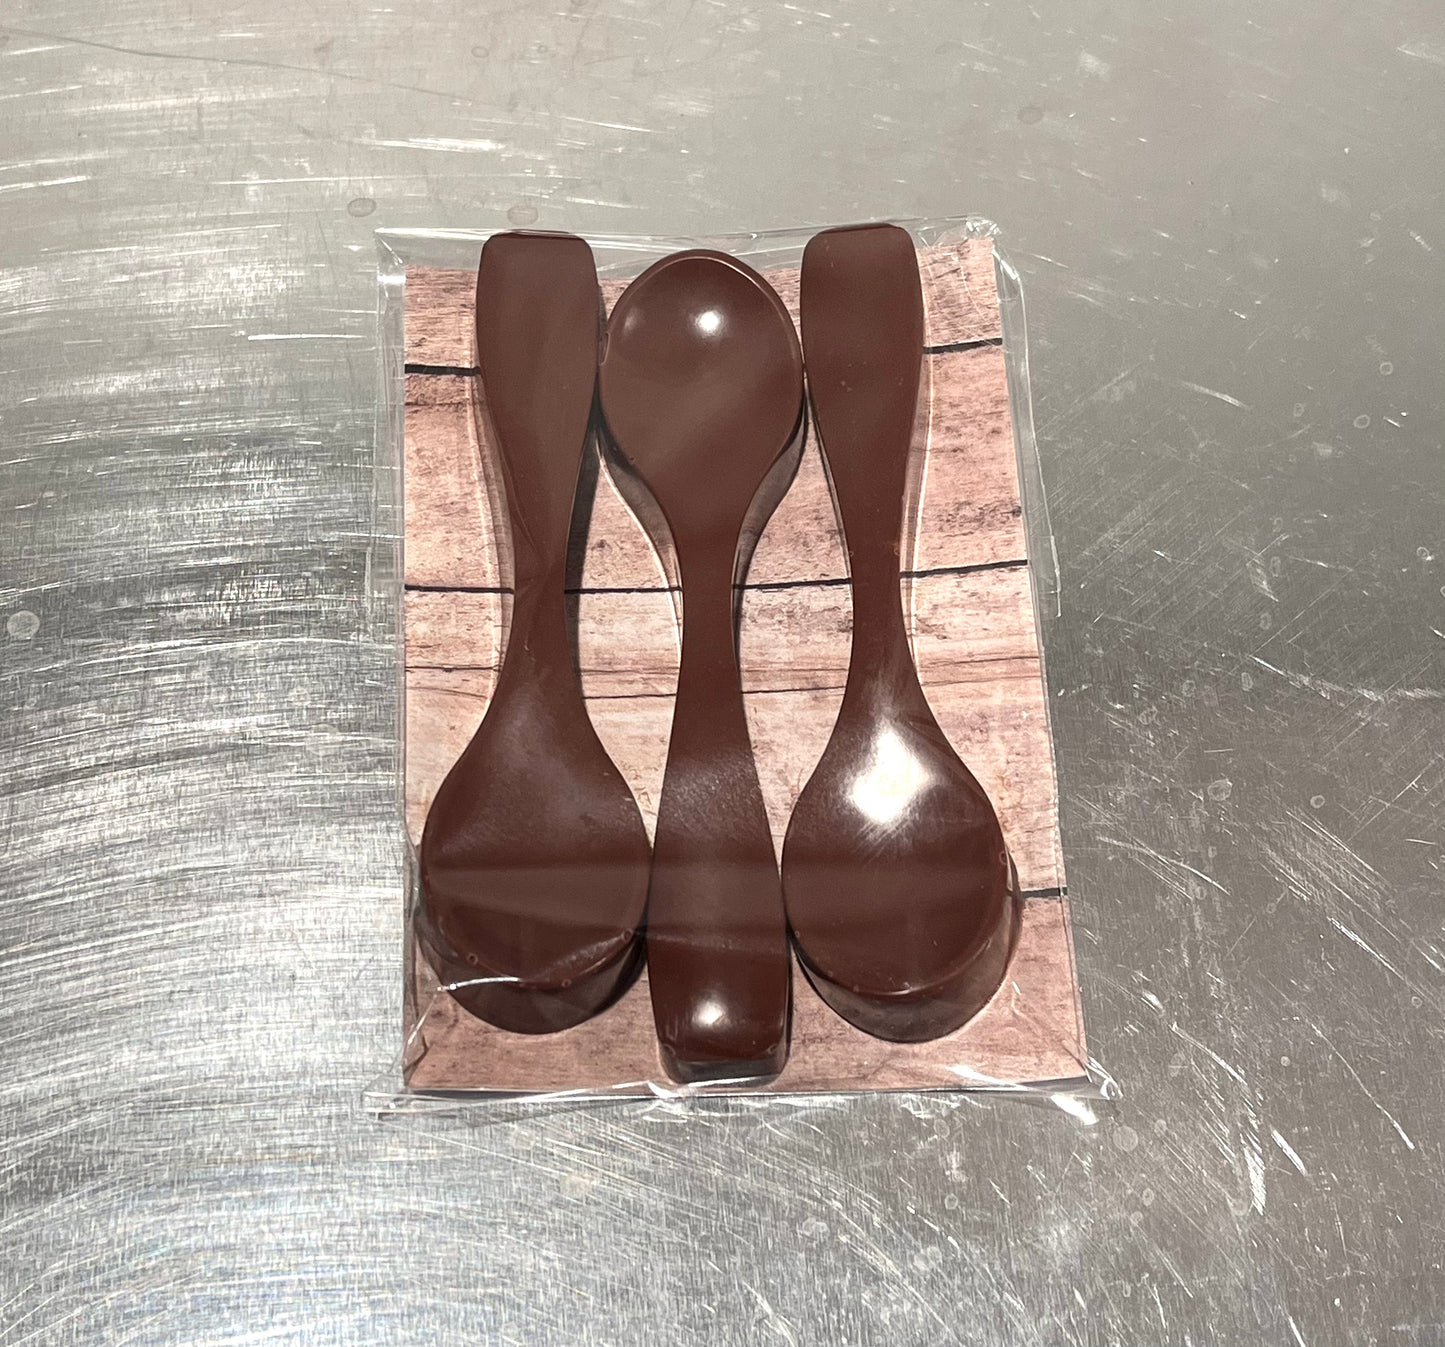 Chocolate spoon trio